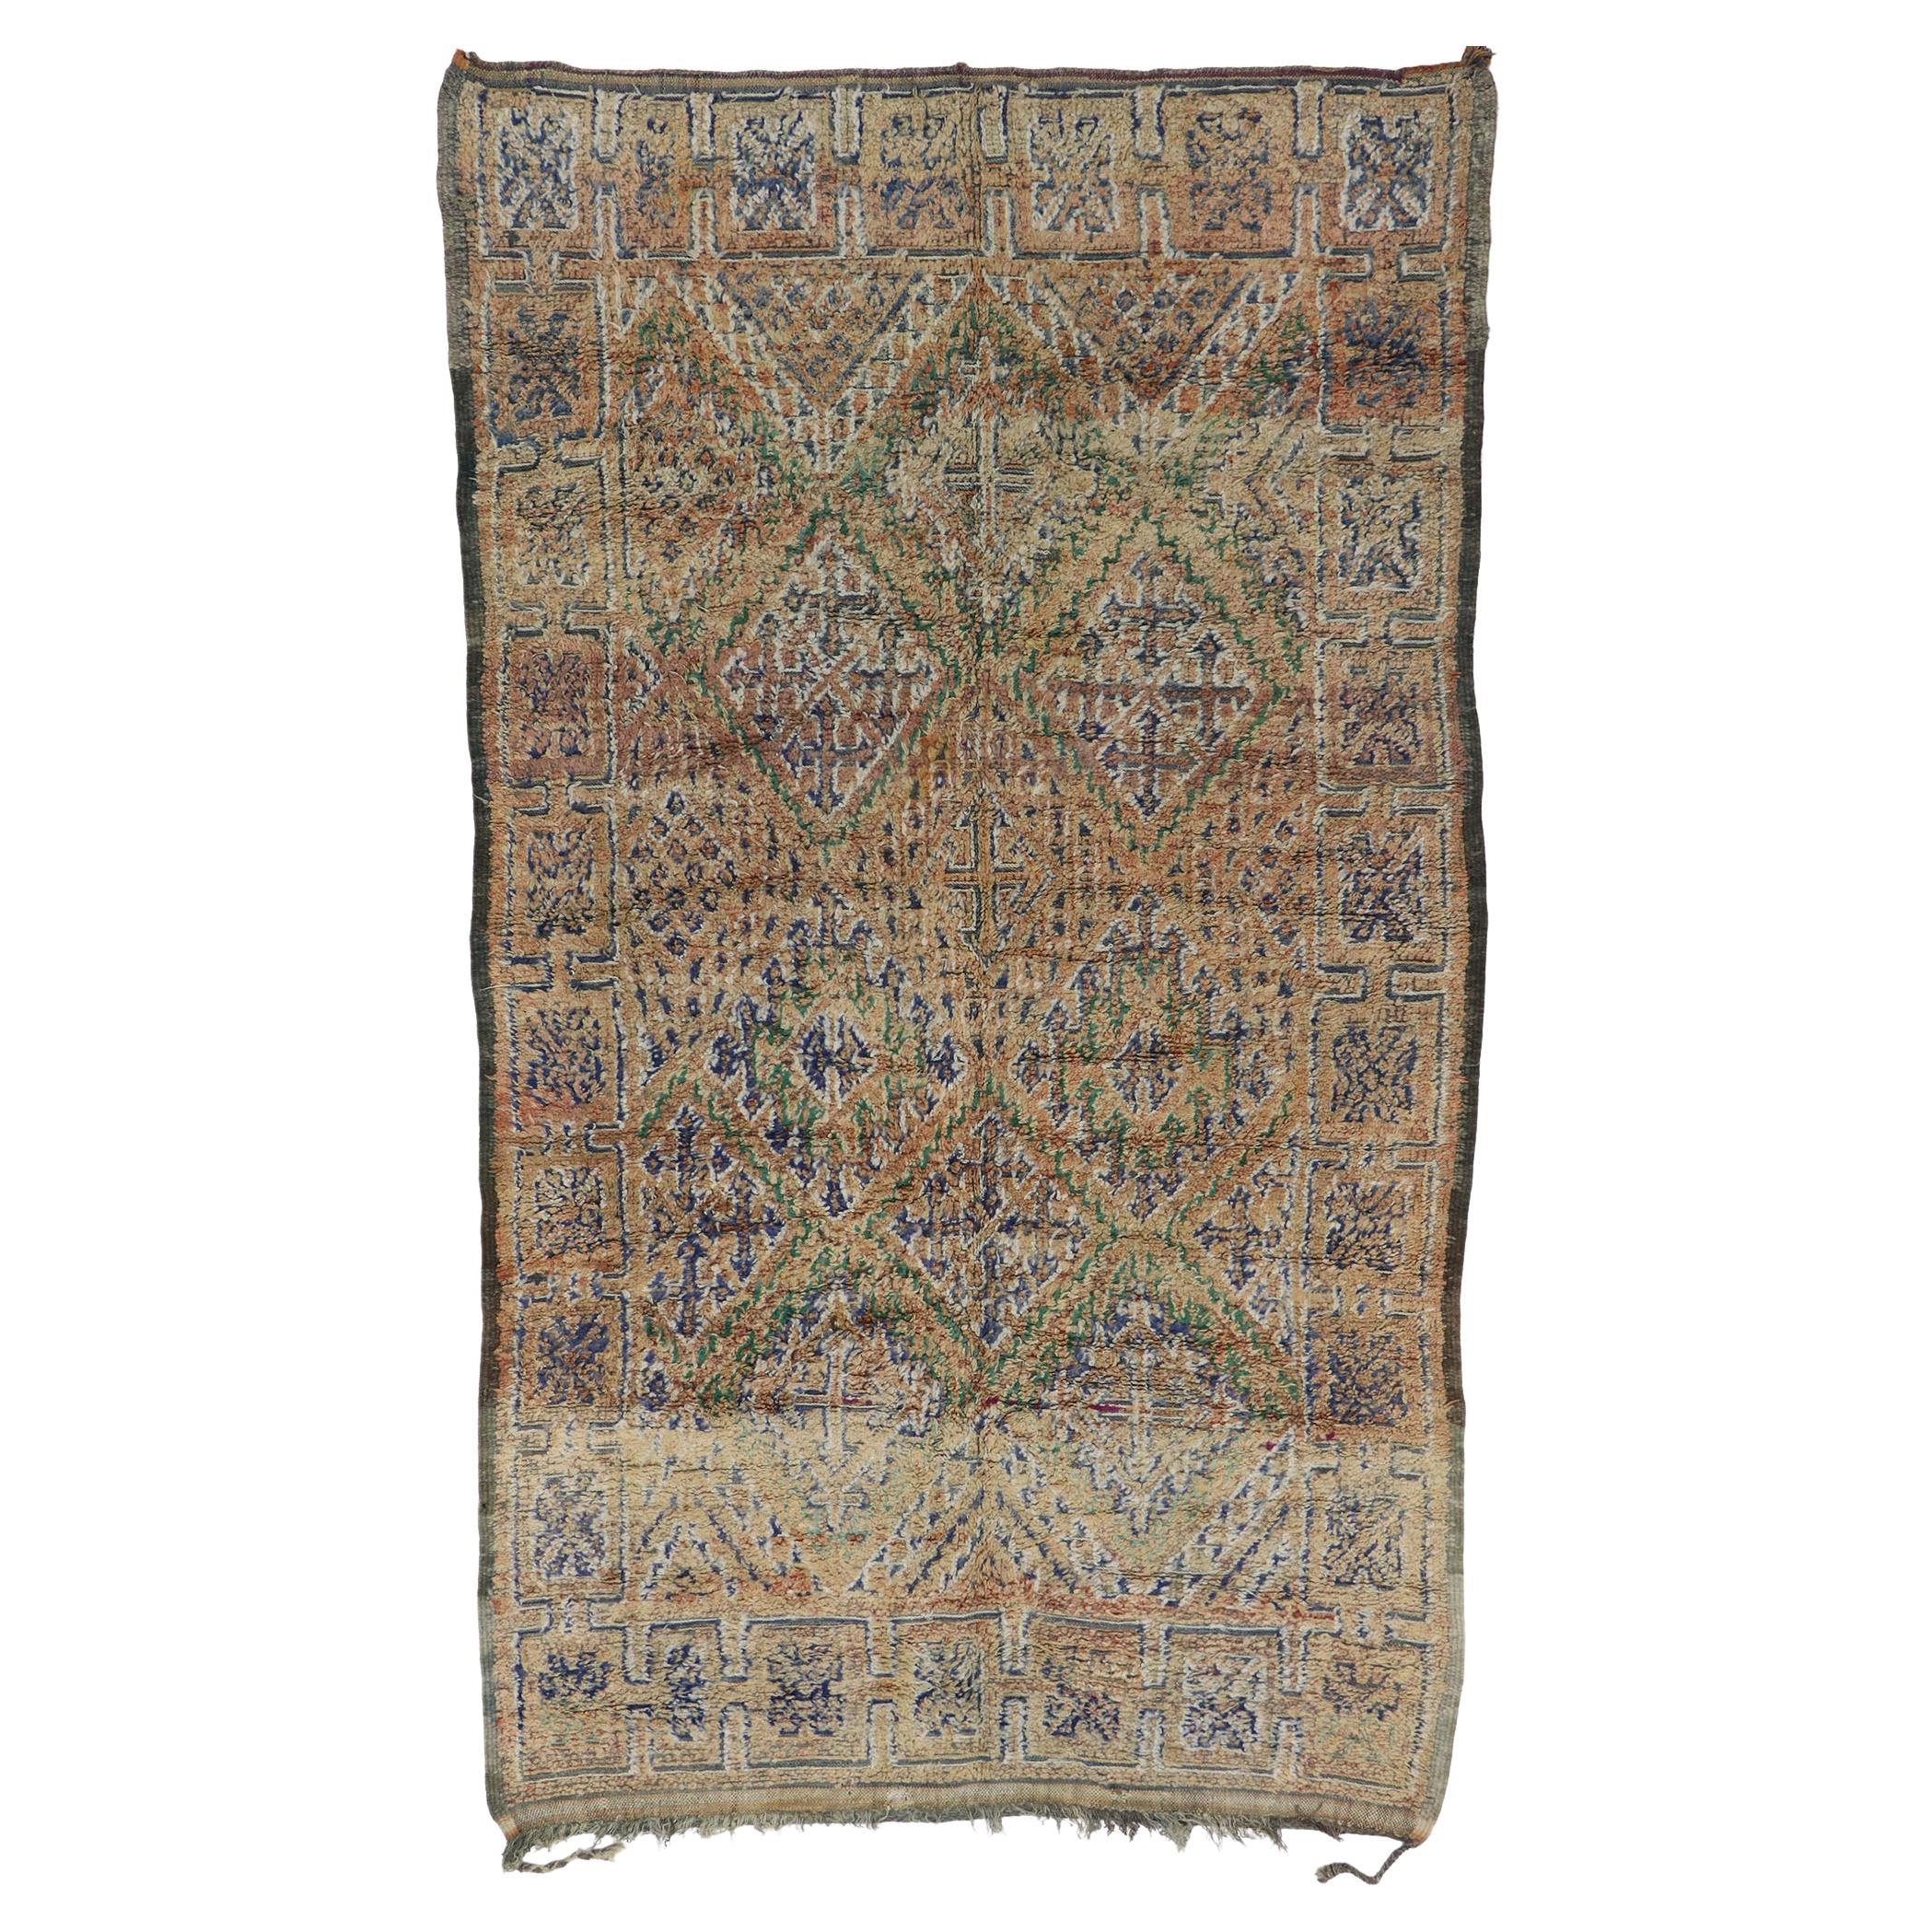 Marokkanischer Vintage-Teppich Beni MGuild, Nomadencharme trifft auf rustikale Eleganz